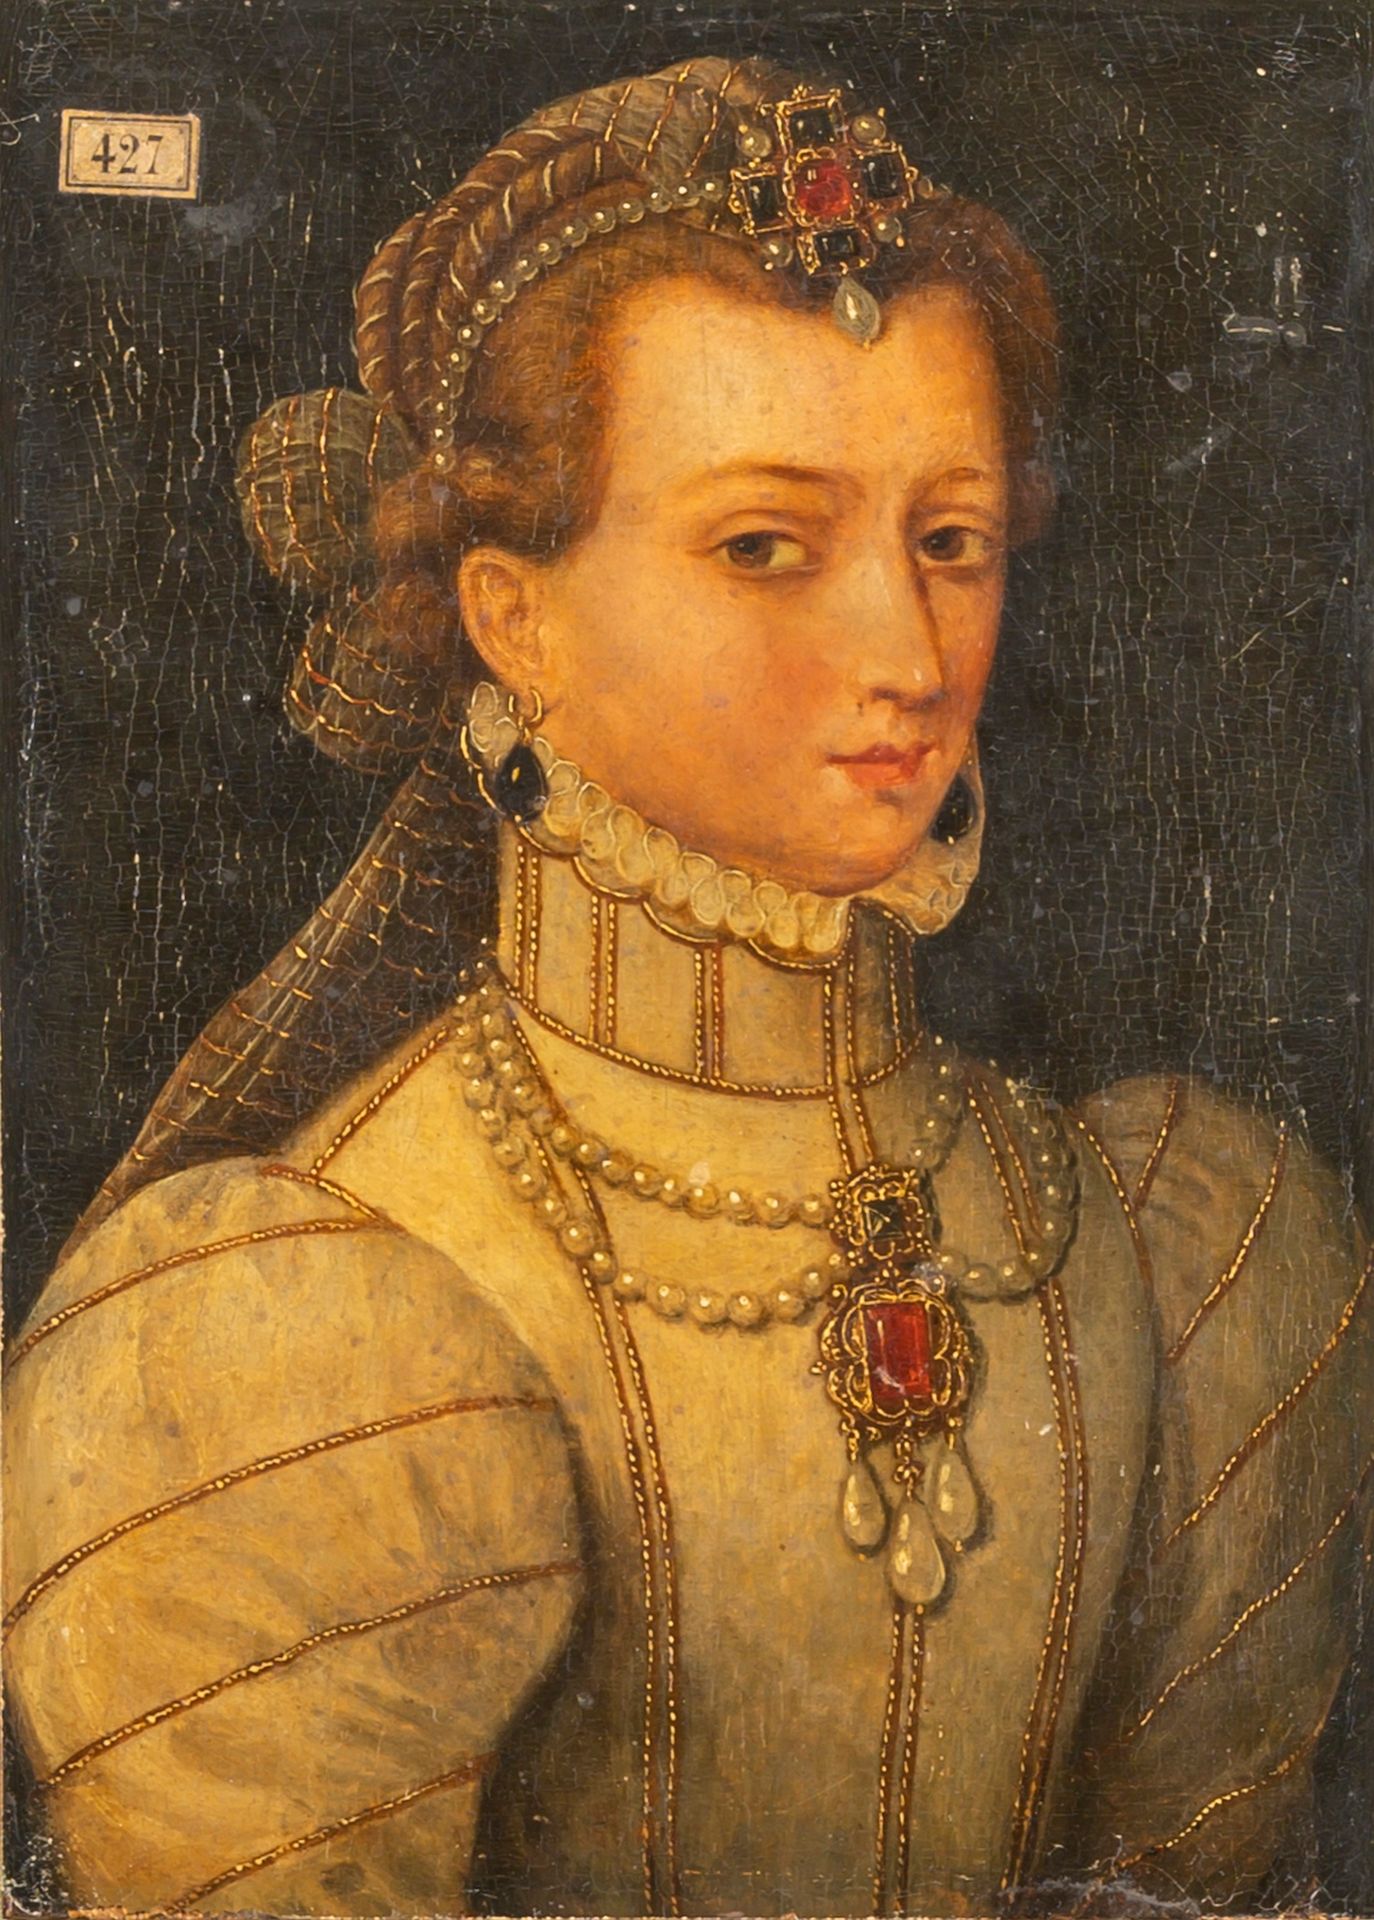 Null 19世纪法国学校中的克卢埃的味道

戴着珍珠项链的年轻女子的肖像

镶木板

26 x 19 厘米

在左上角有一个数字 427